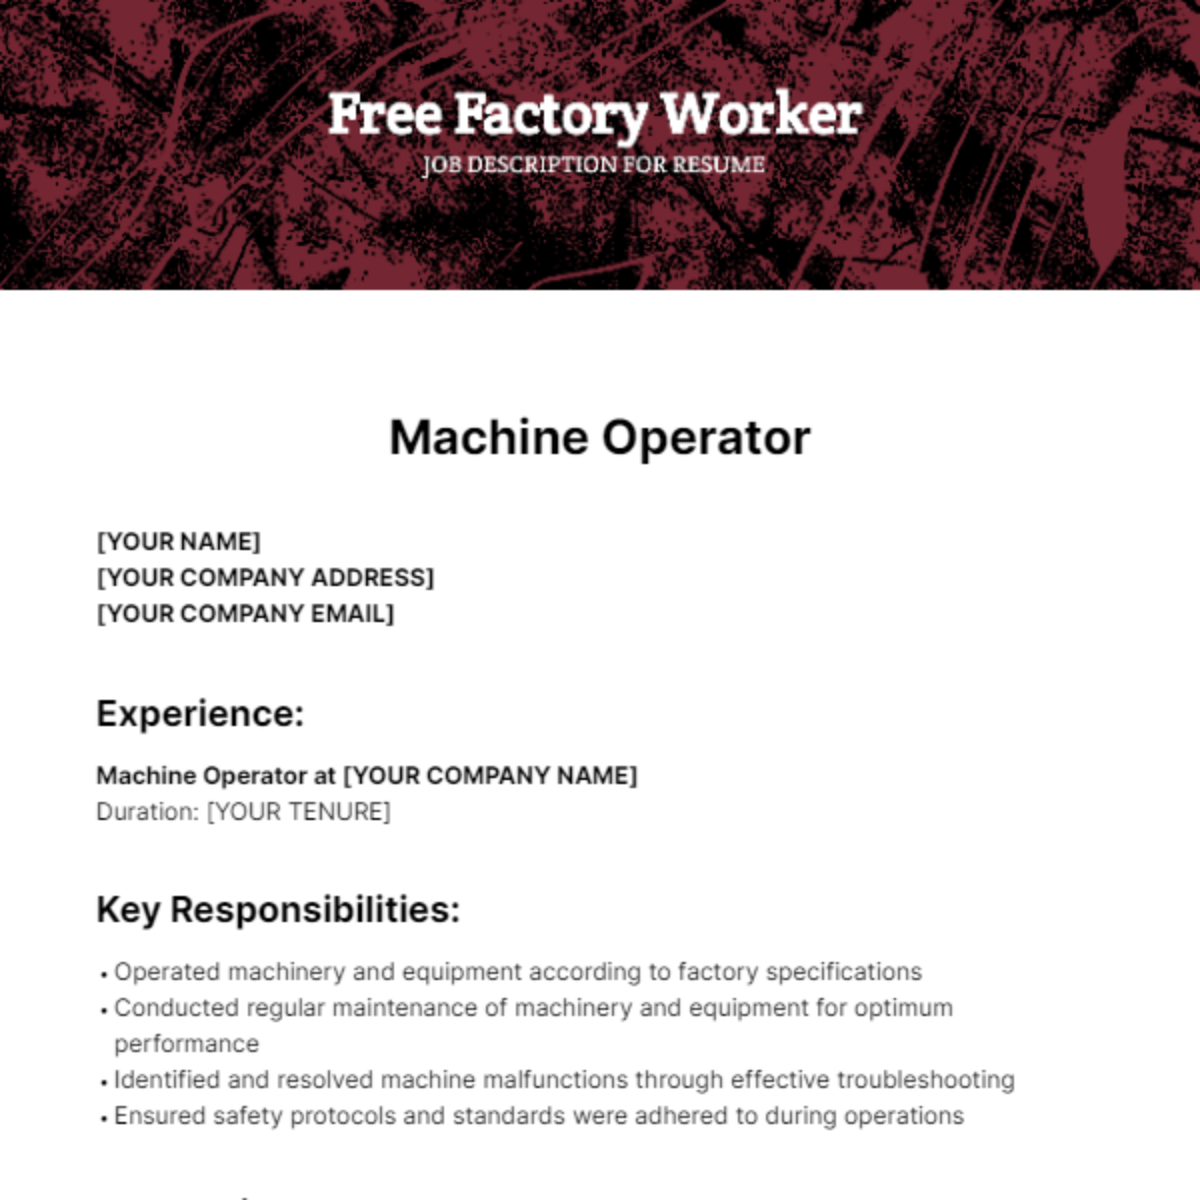 Factory Worker Job Description for Resume Template